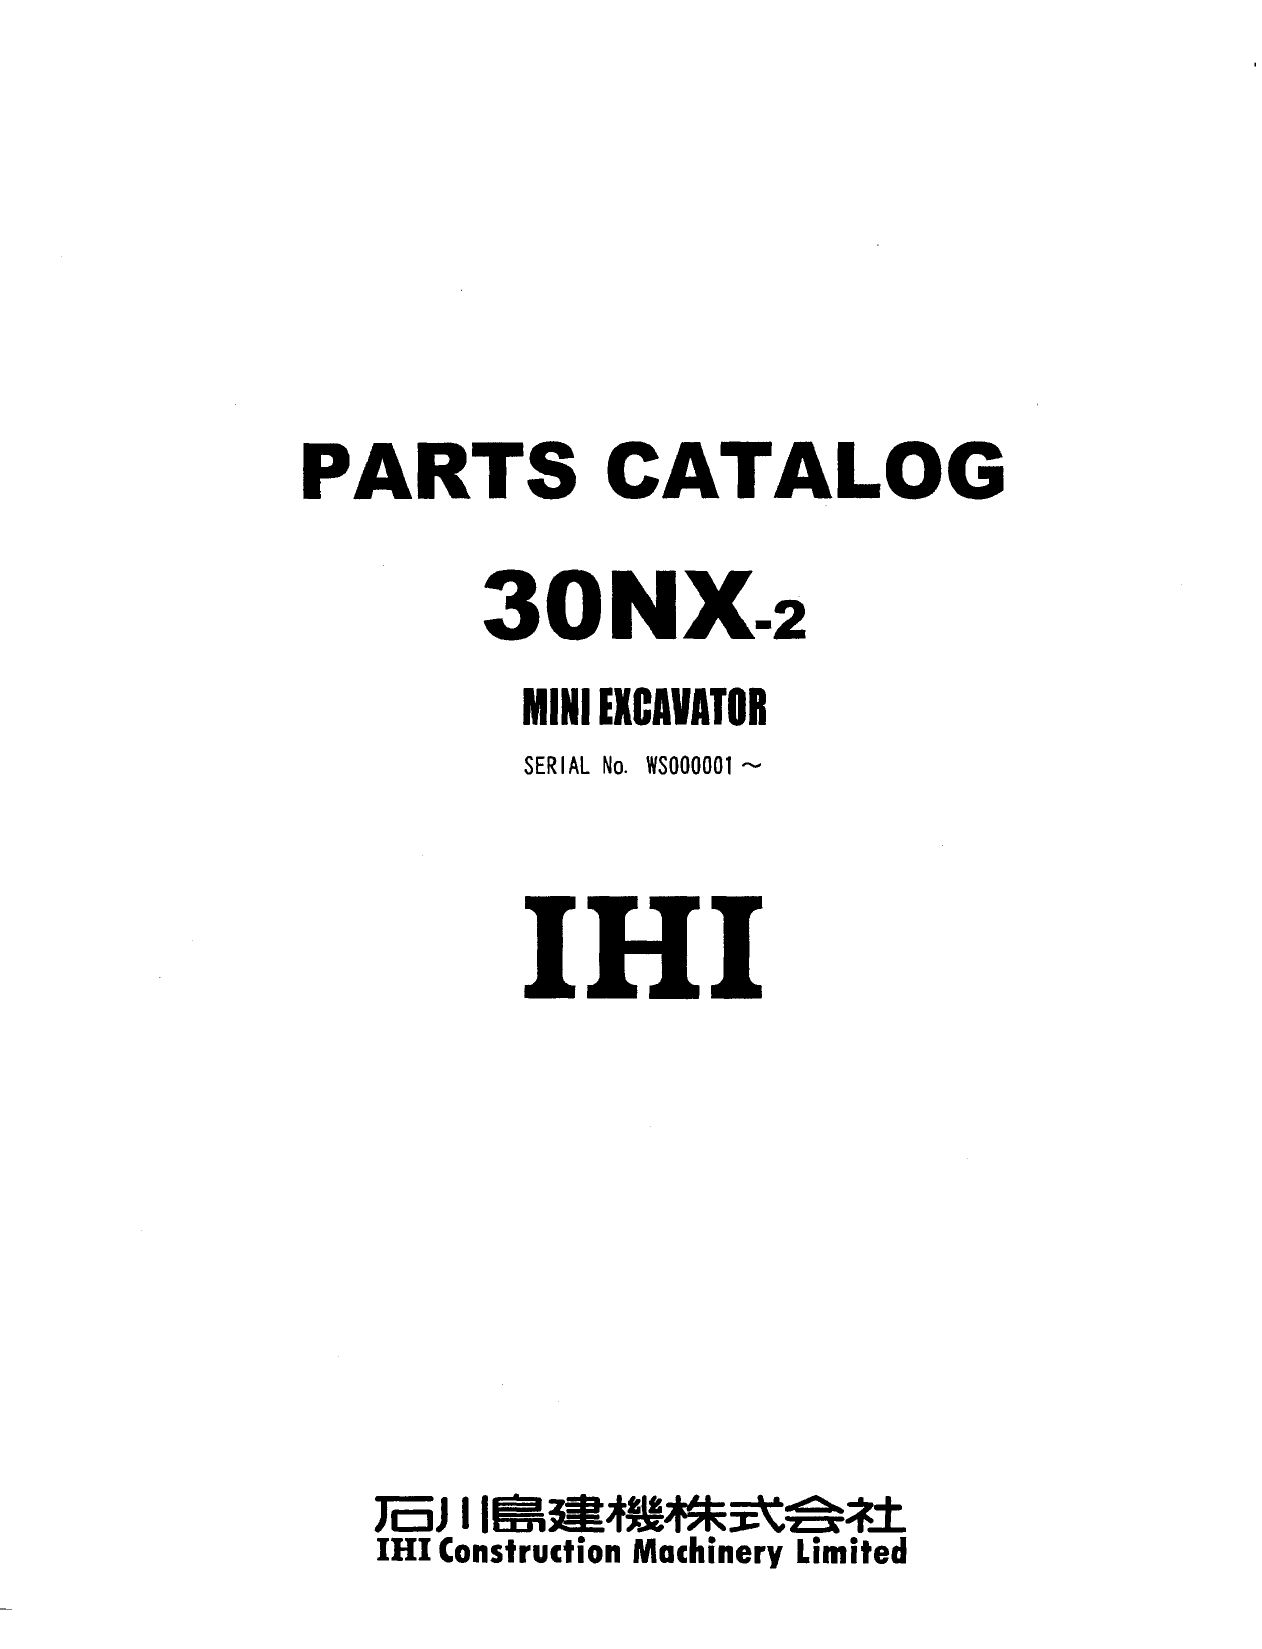 IHI 30NX-2 mini excavator parts catalog Preview image 6